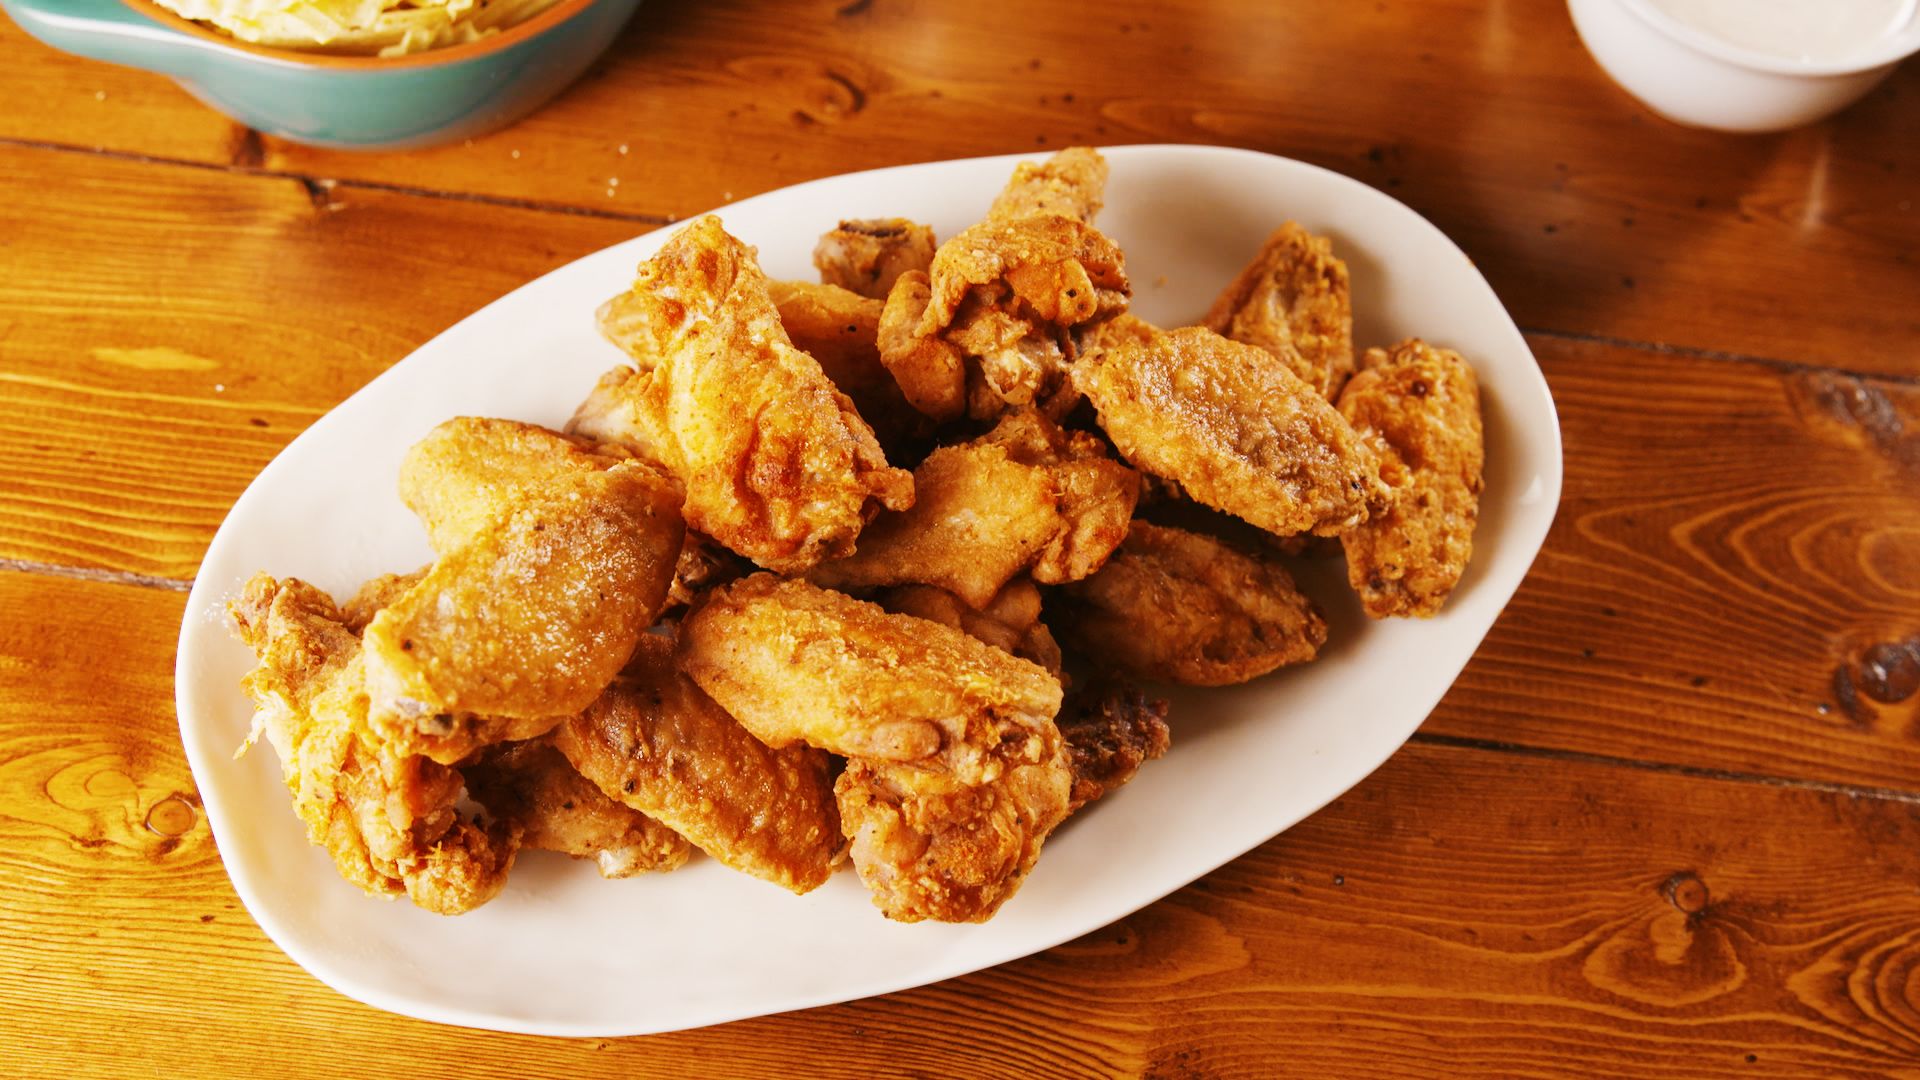 https://hips.hearstapps.com/vidthumb/images/delish-fried-chicken-wings-seo-1new-1540589238.jpg